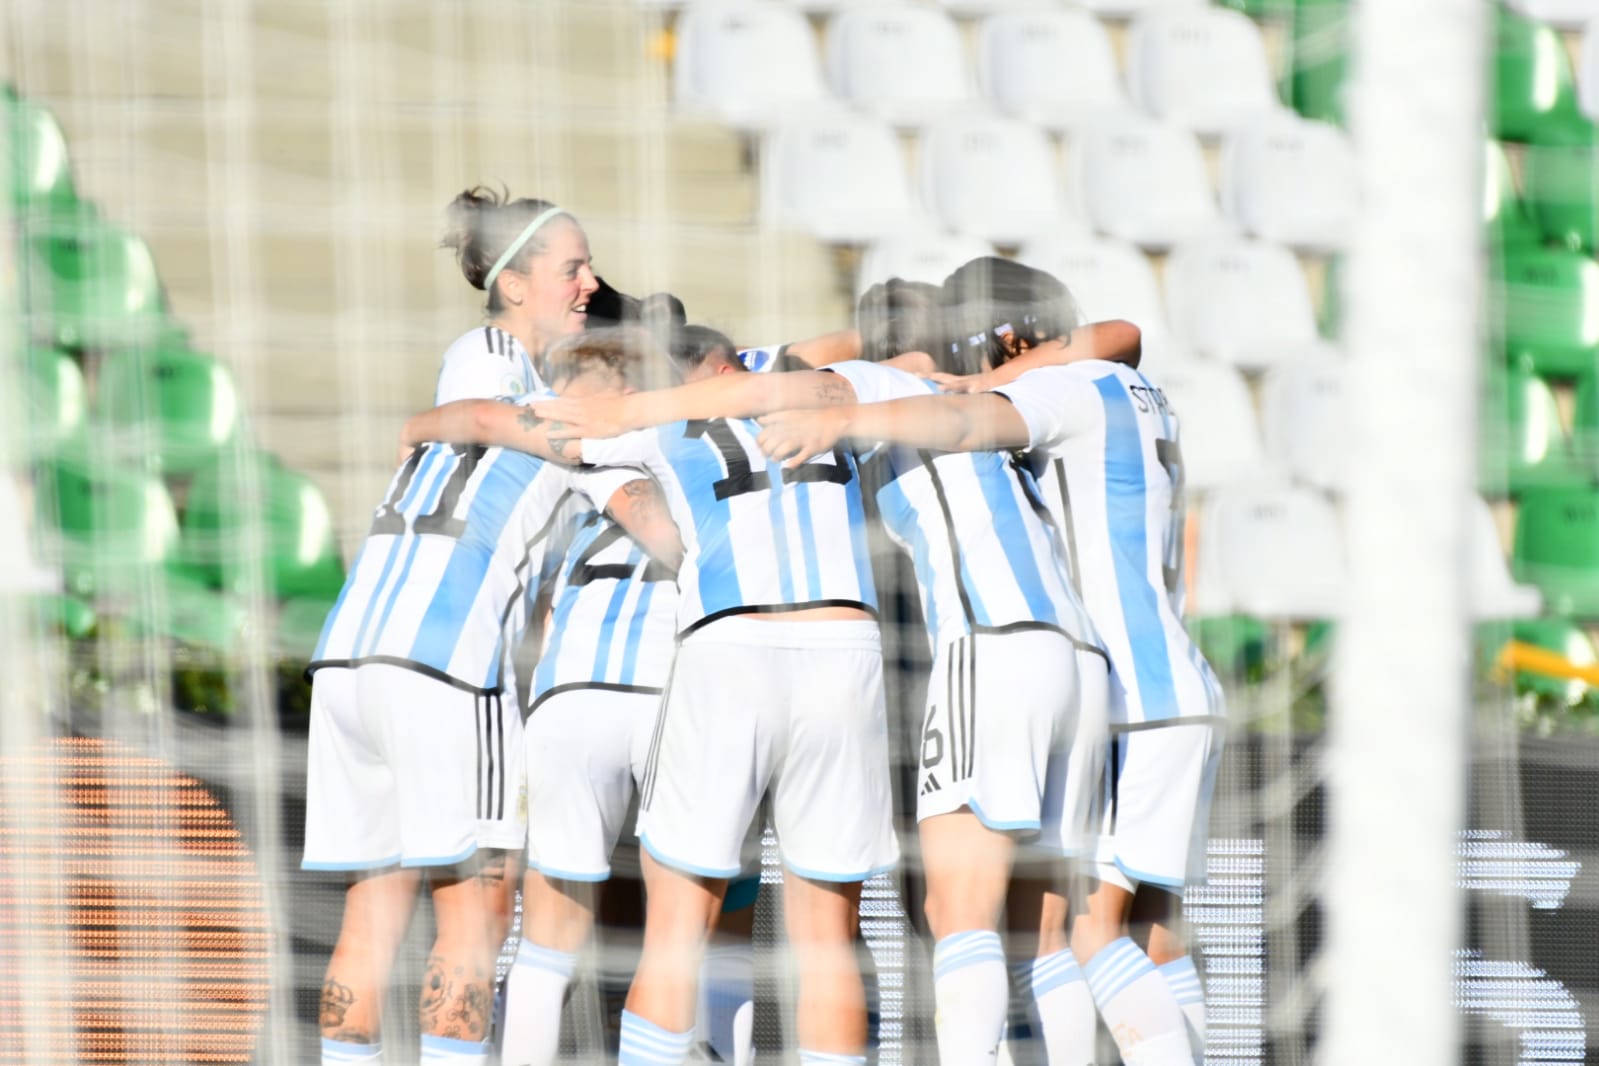 El clásico fue albiceleste: Argentina goleó a Uruguay en la Copa América | Canal Showsport